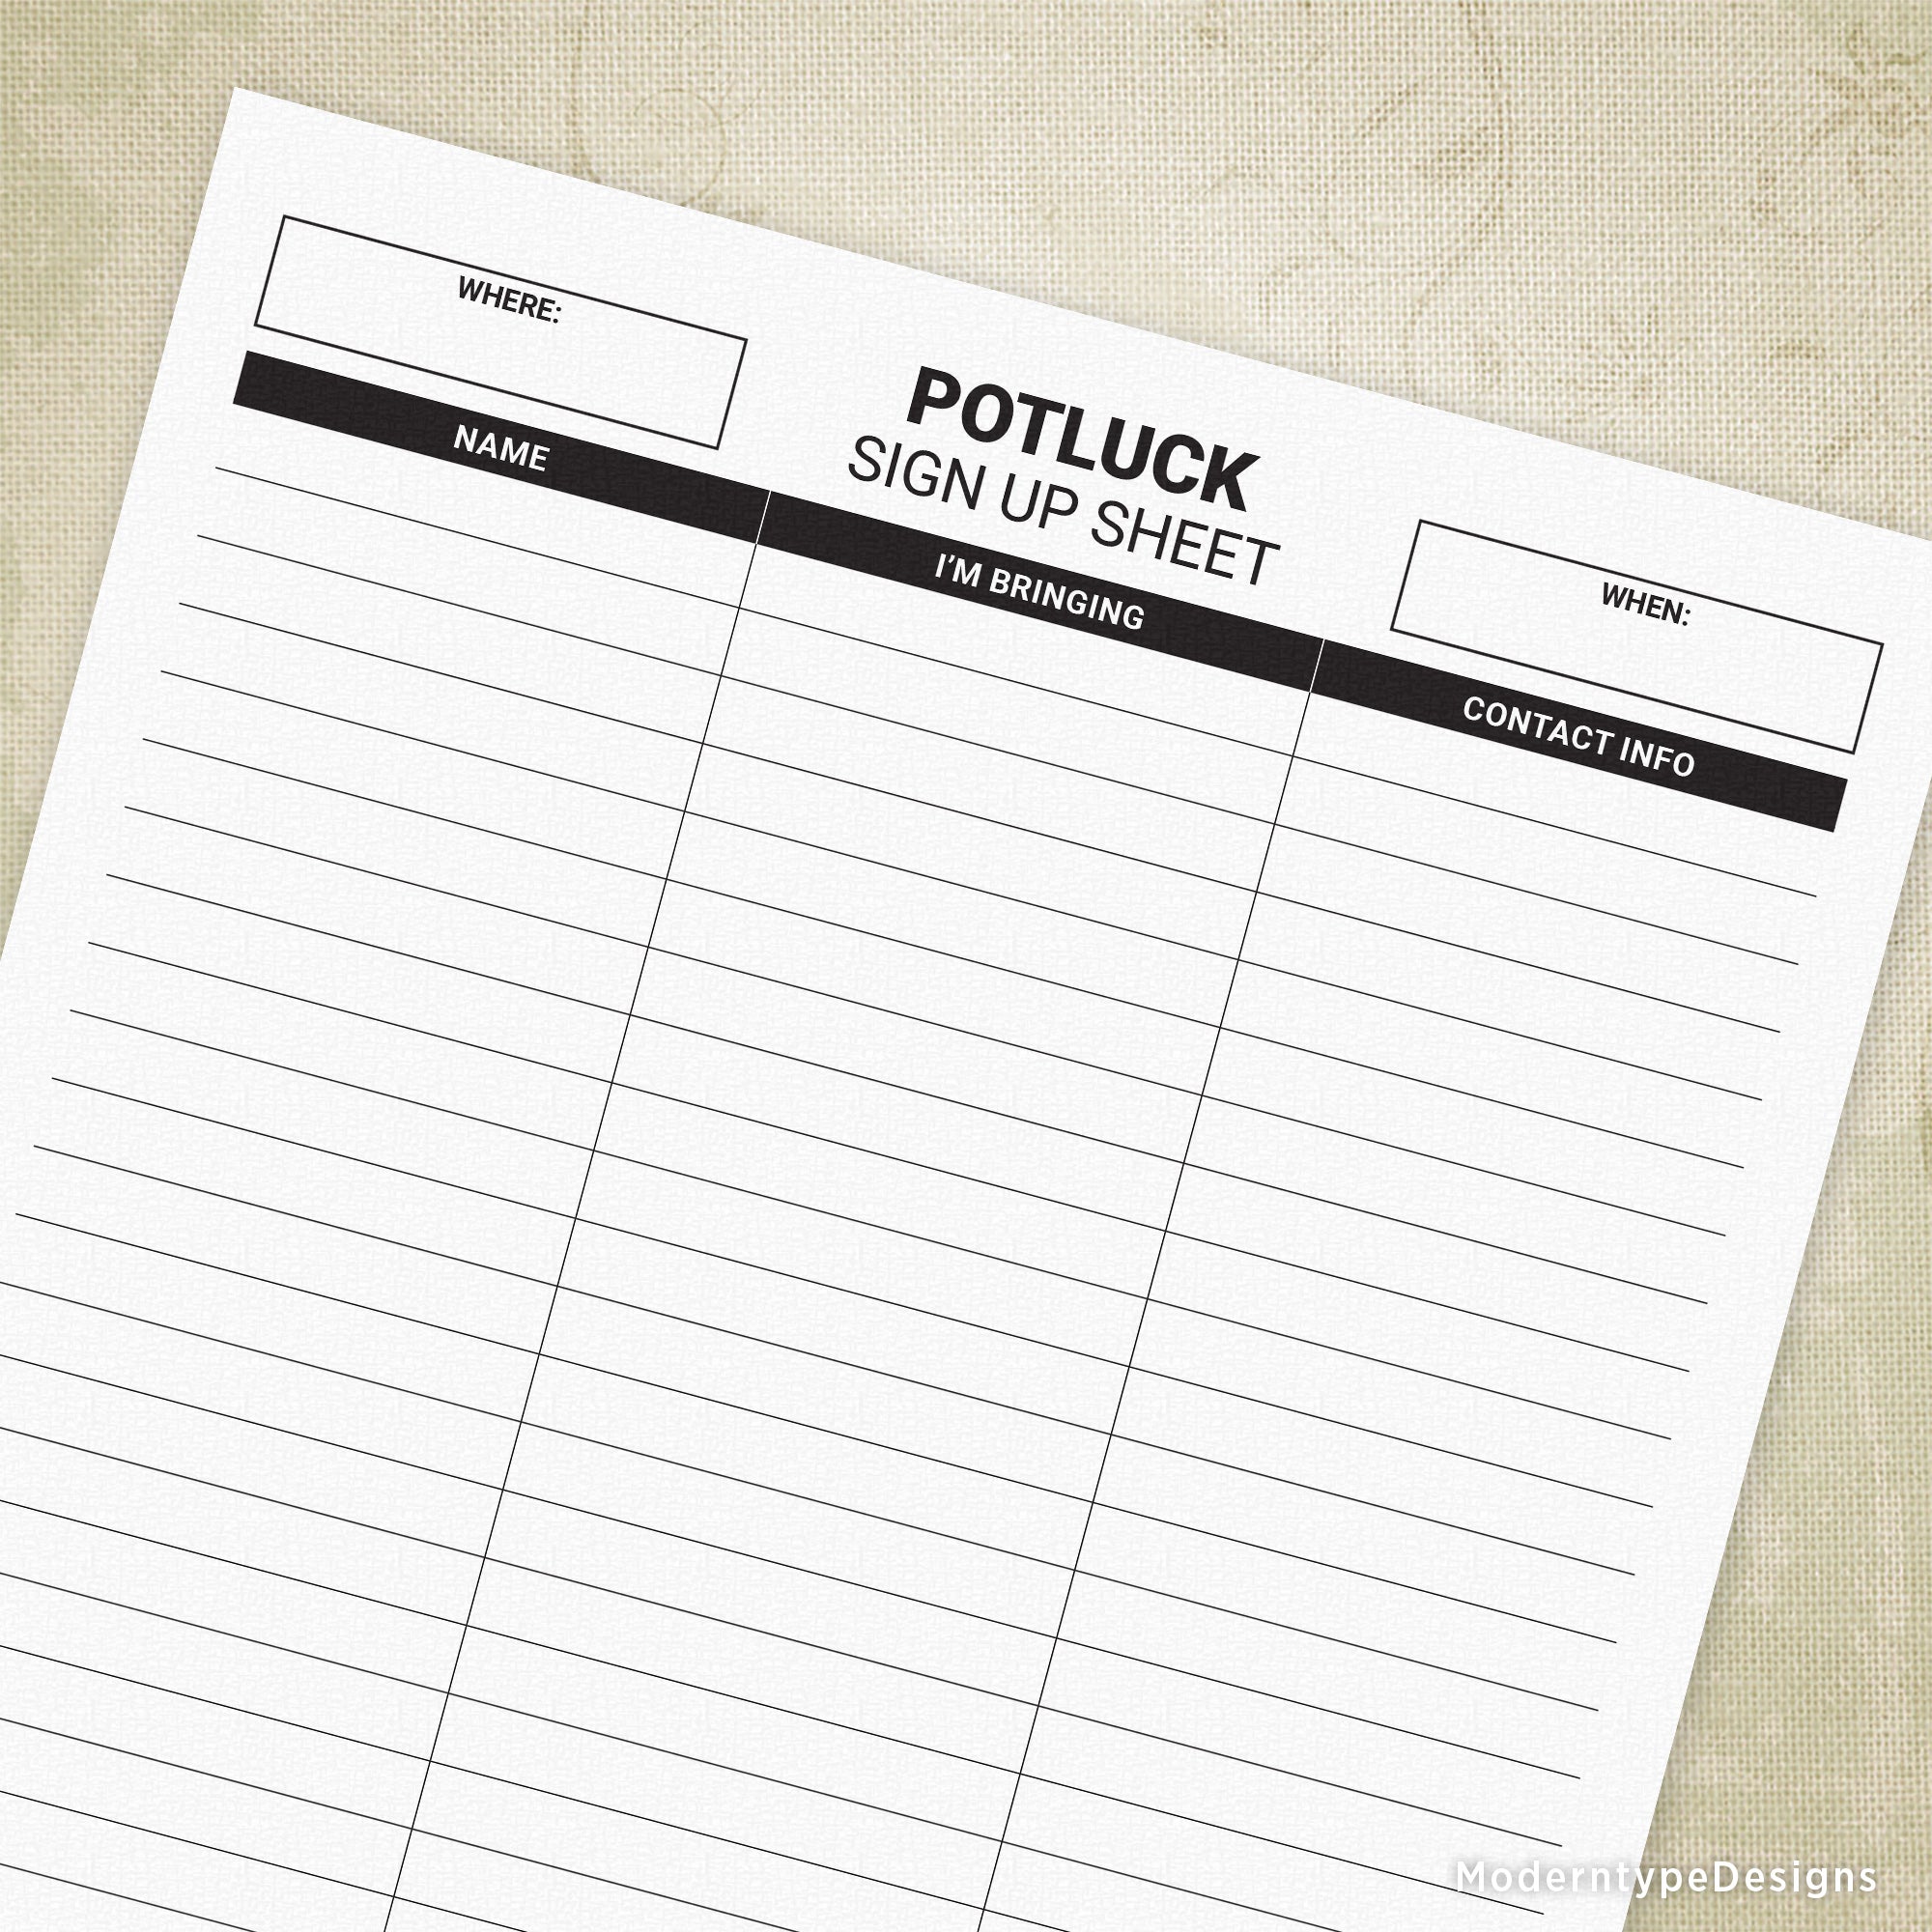 Potluck Sign Up Sheet Printable